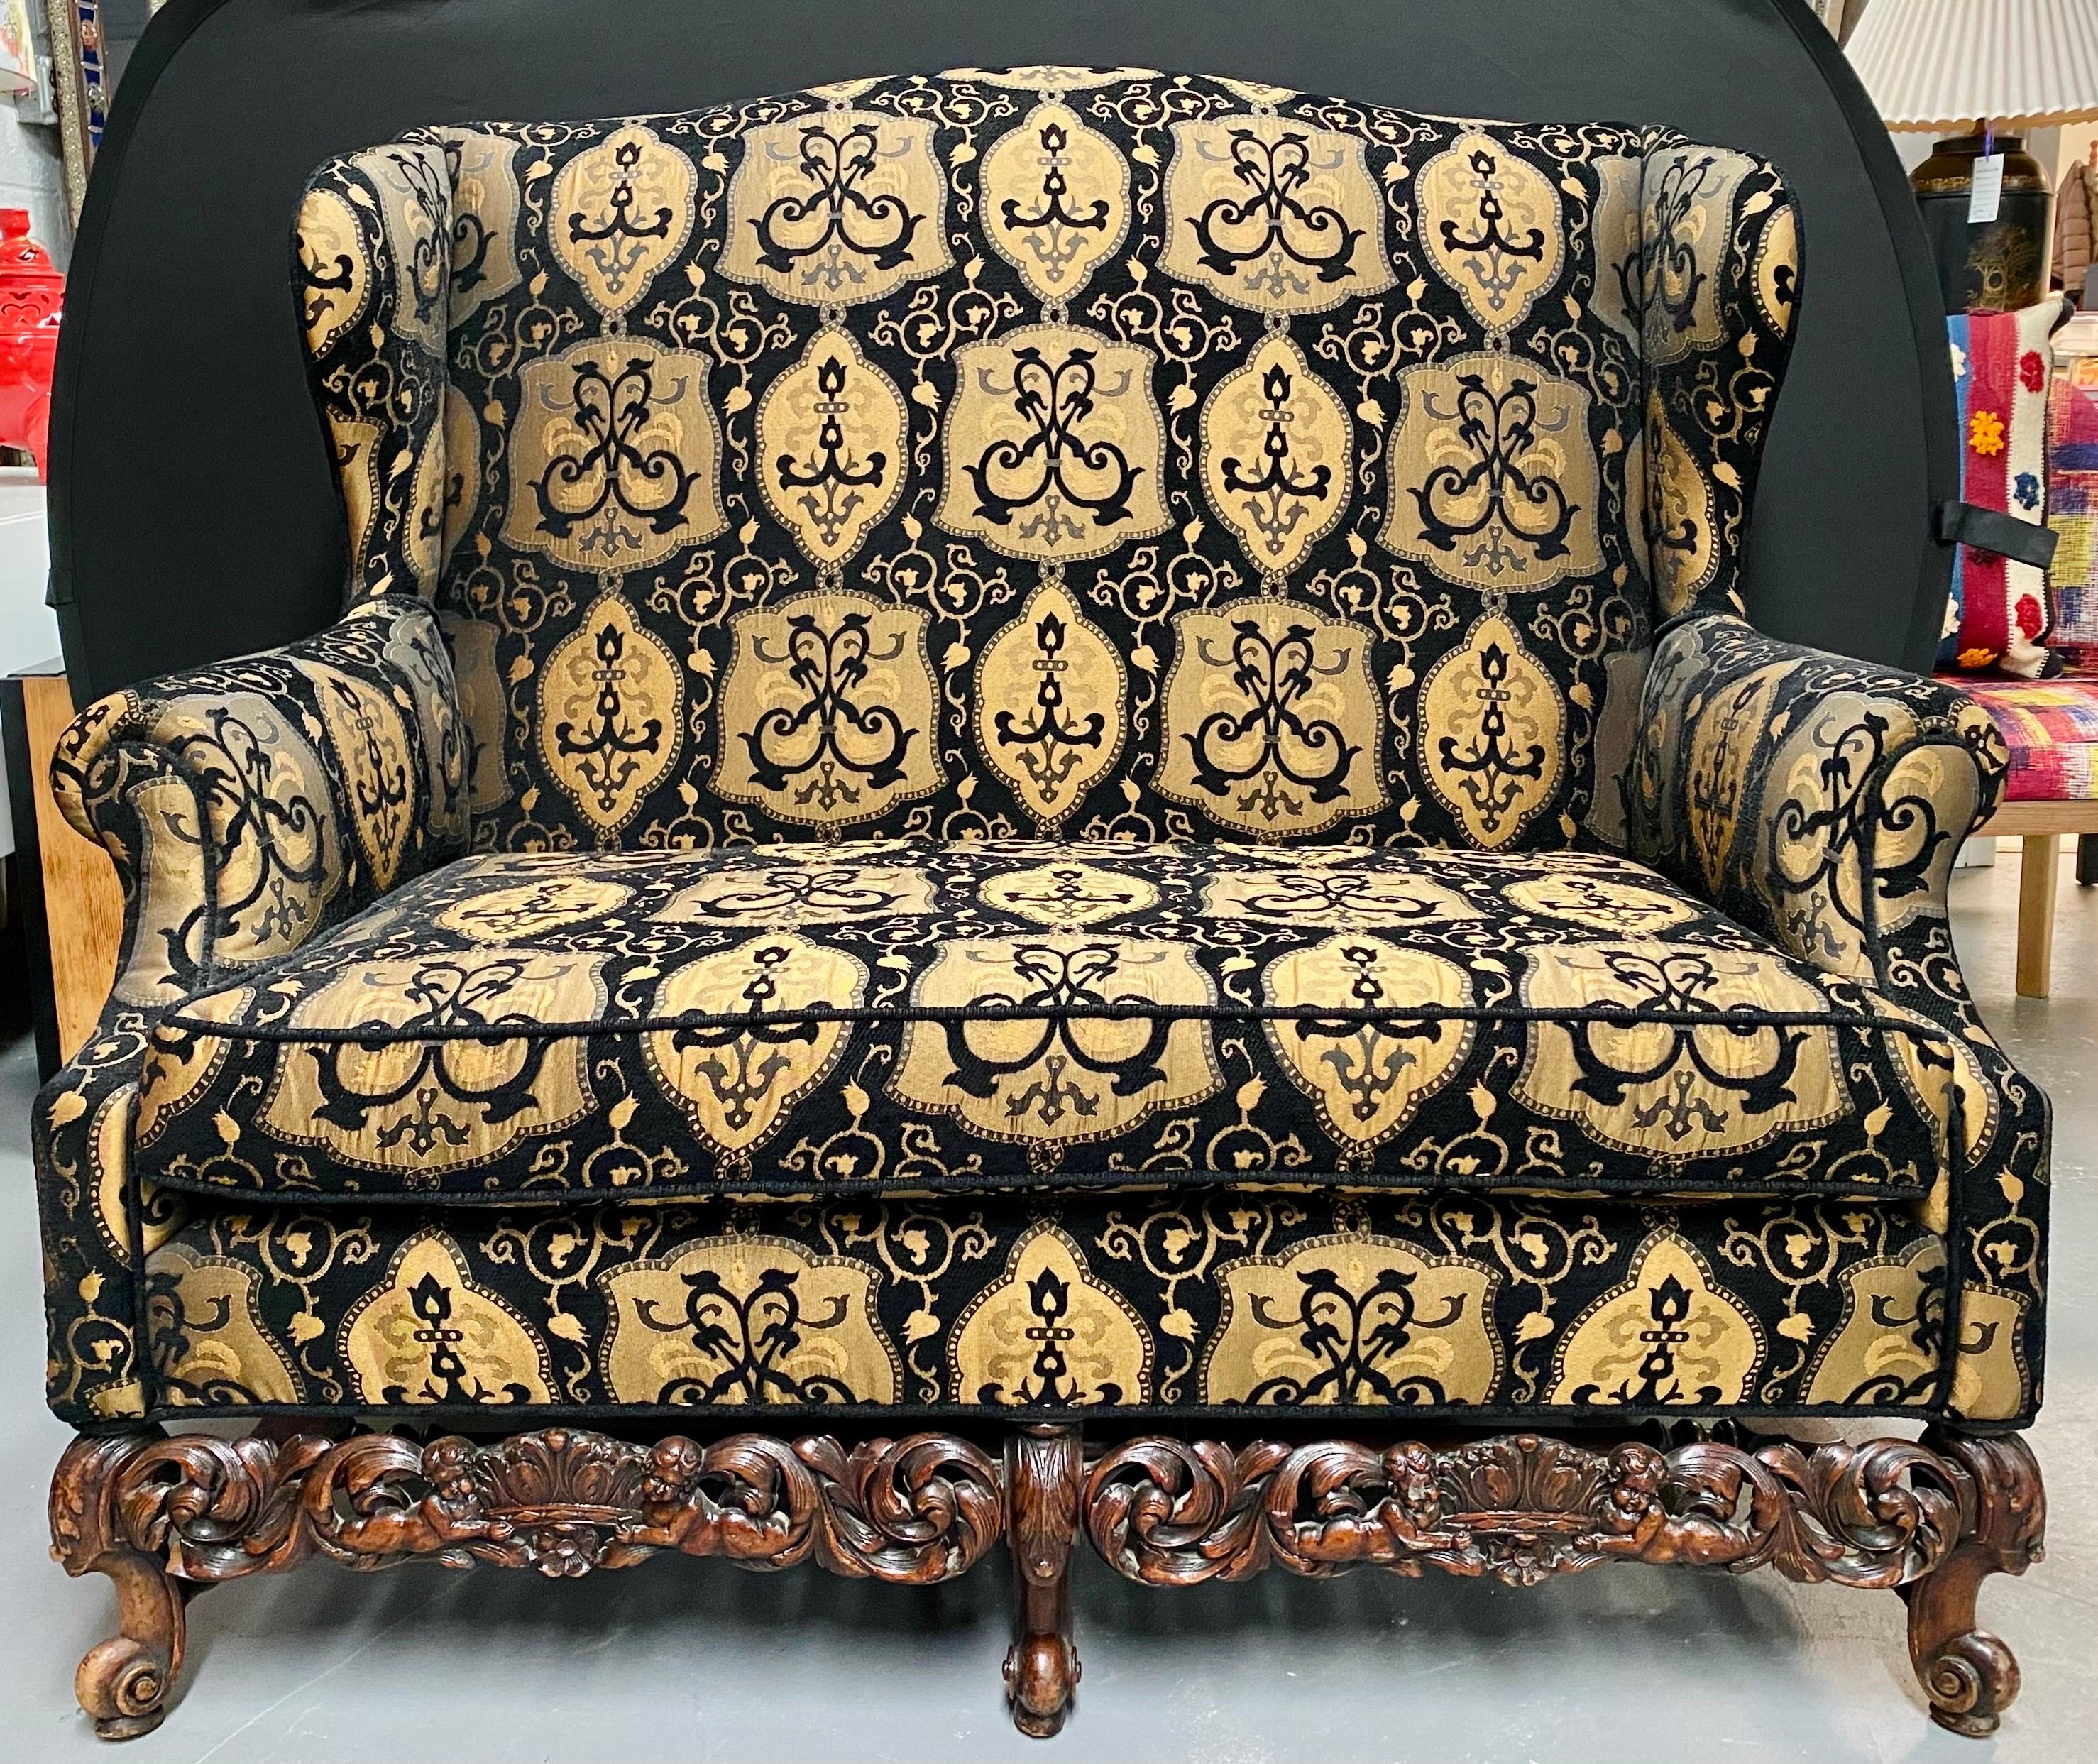 European Italian Rococo Revival Style Settee or Sofa with Heraldic Motif in Black & Beige For Sale